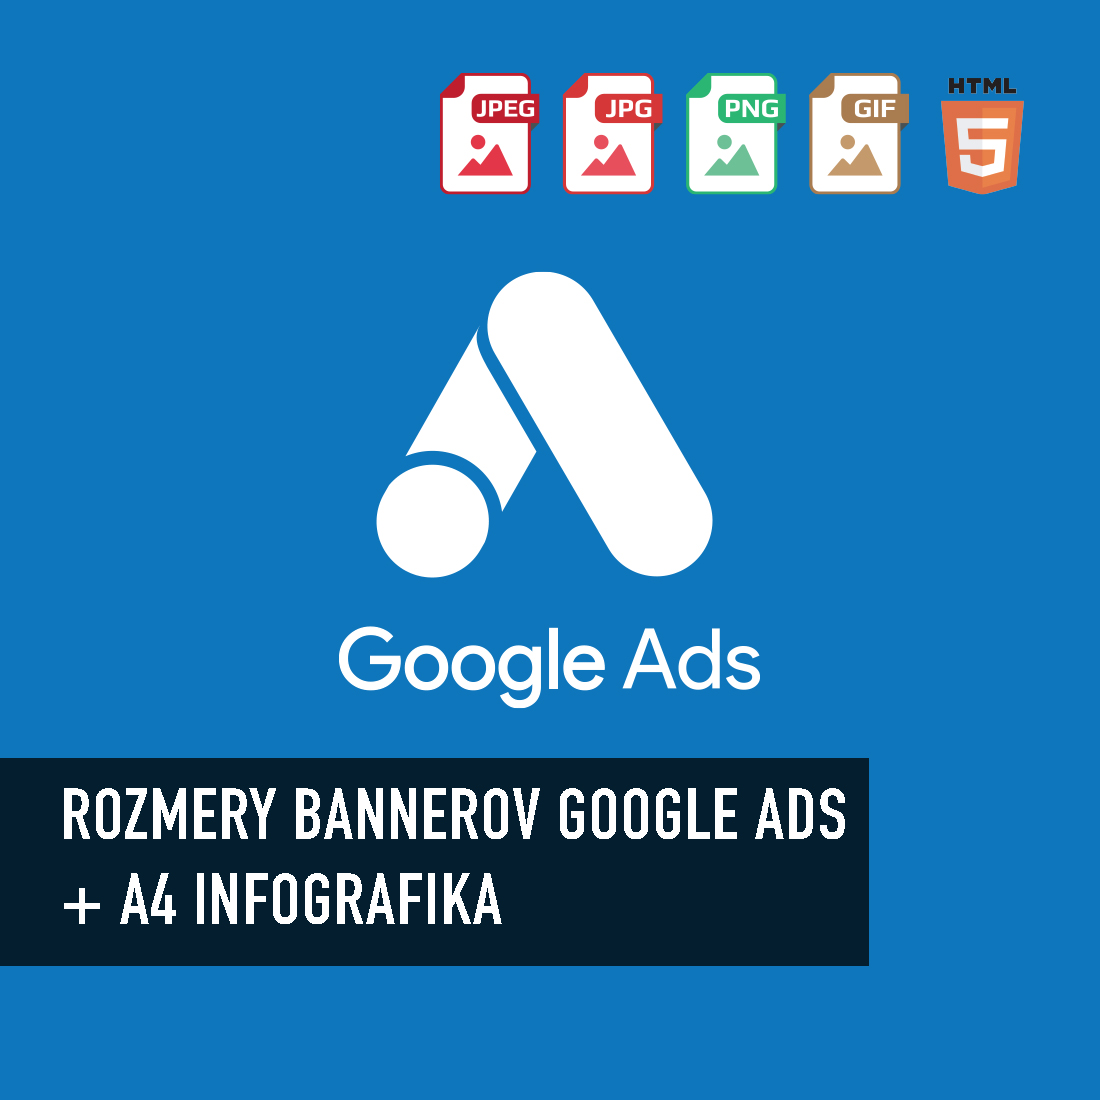 Rozmery bannerov Google Ads